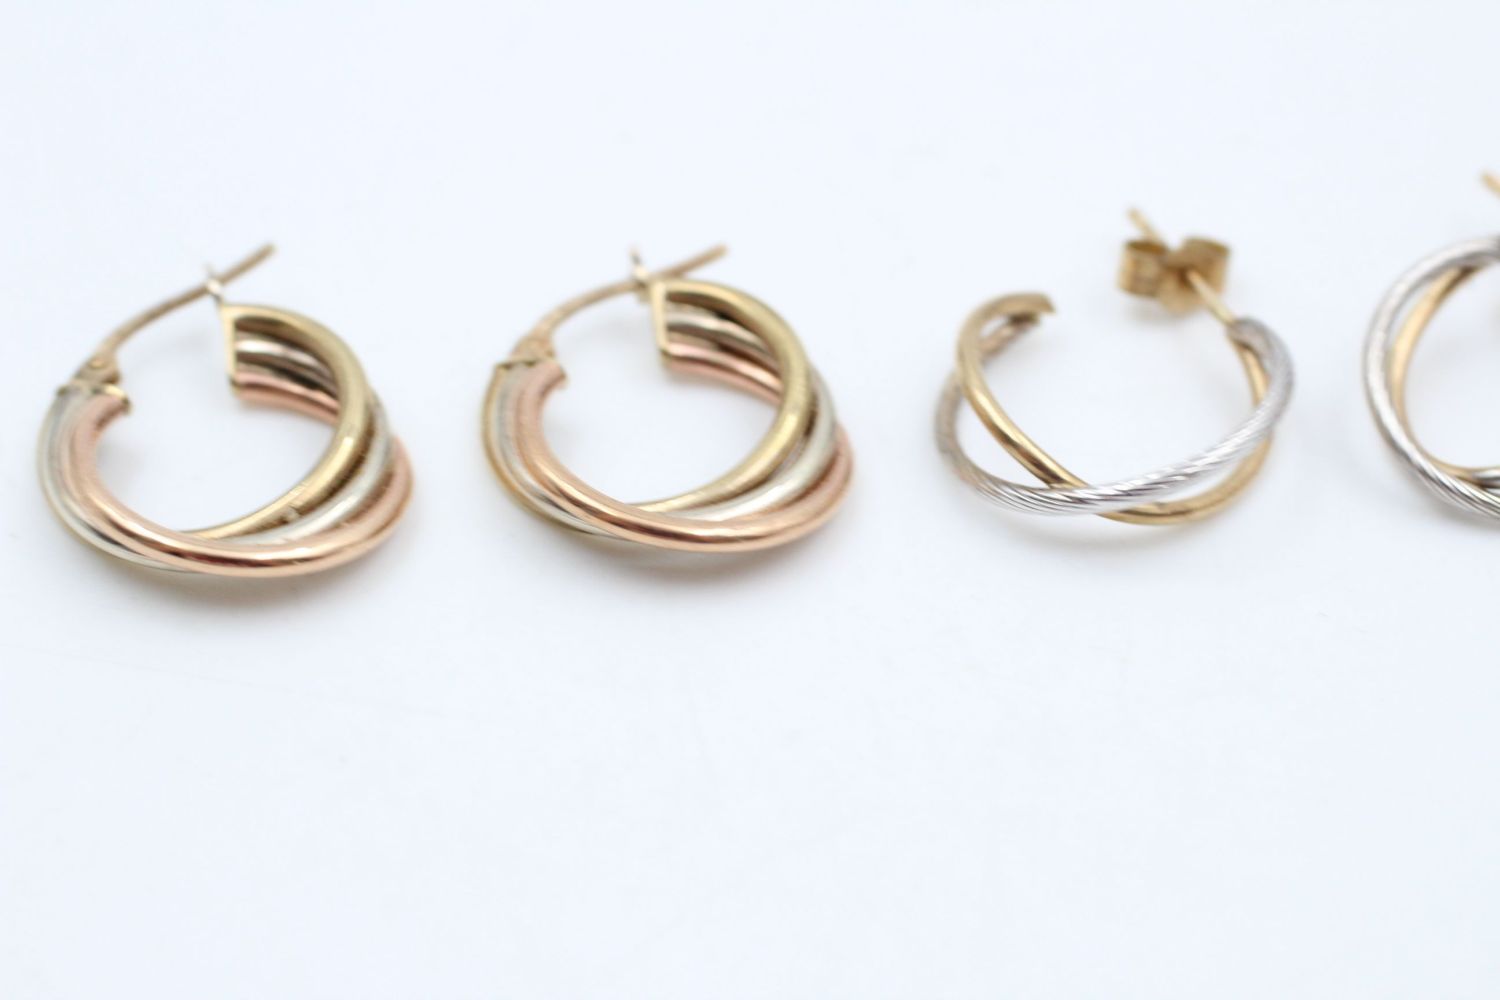 2 x 9ct Gold hoop earrings inc. tri-tone, twisted 3.6 grams gross - Image 3 of 5